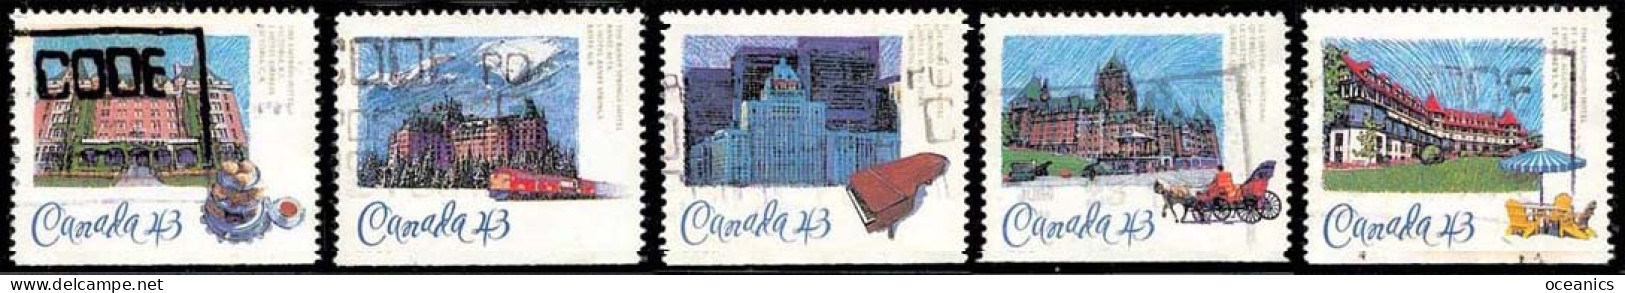 Canada (Scott No.1467-71 - Hotels Historiques Du CPR / Canada / Historic CPR Hotels) (o)  SE At Bottom - Série / Set - Oblitérés